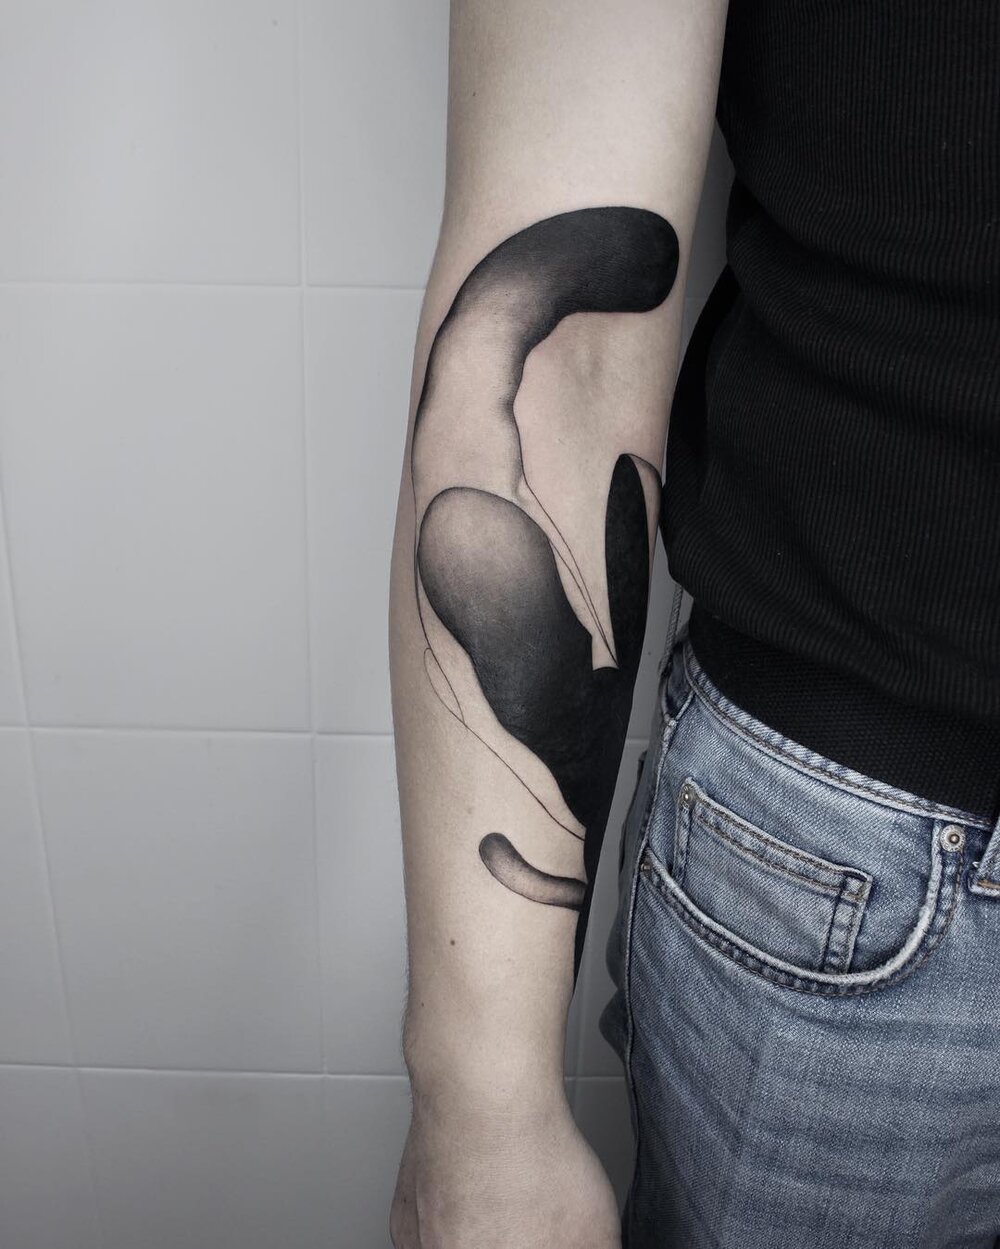 ilia-zharkov-tattoos-4.jpeg